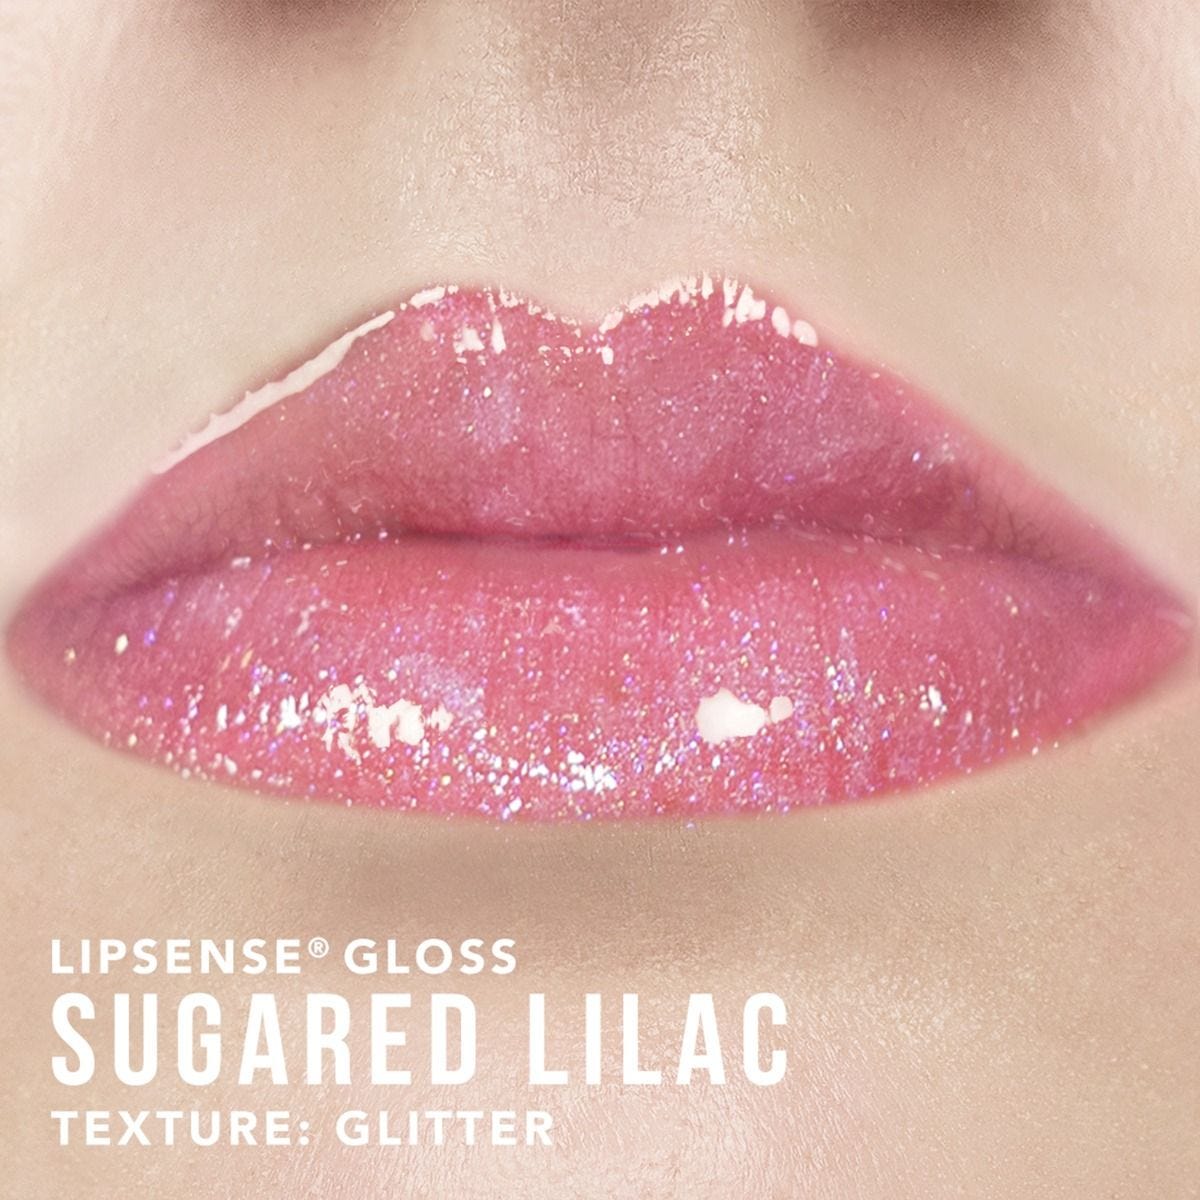 Lipsense® Sugared Lilac Gloss Image